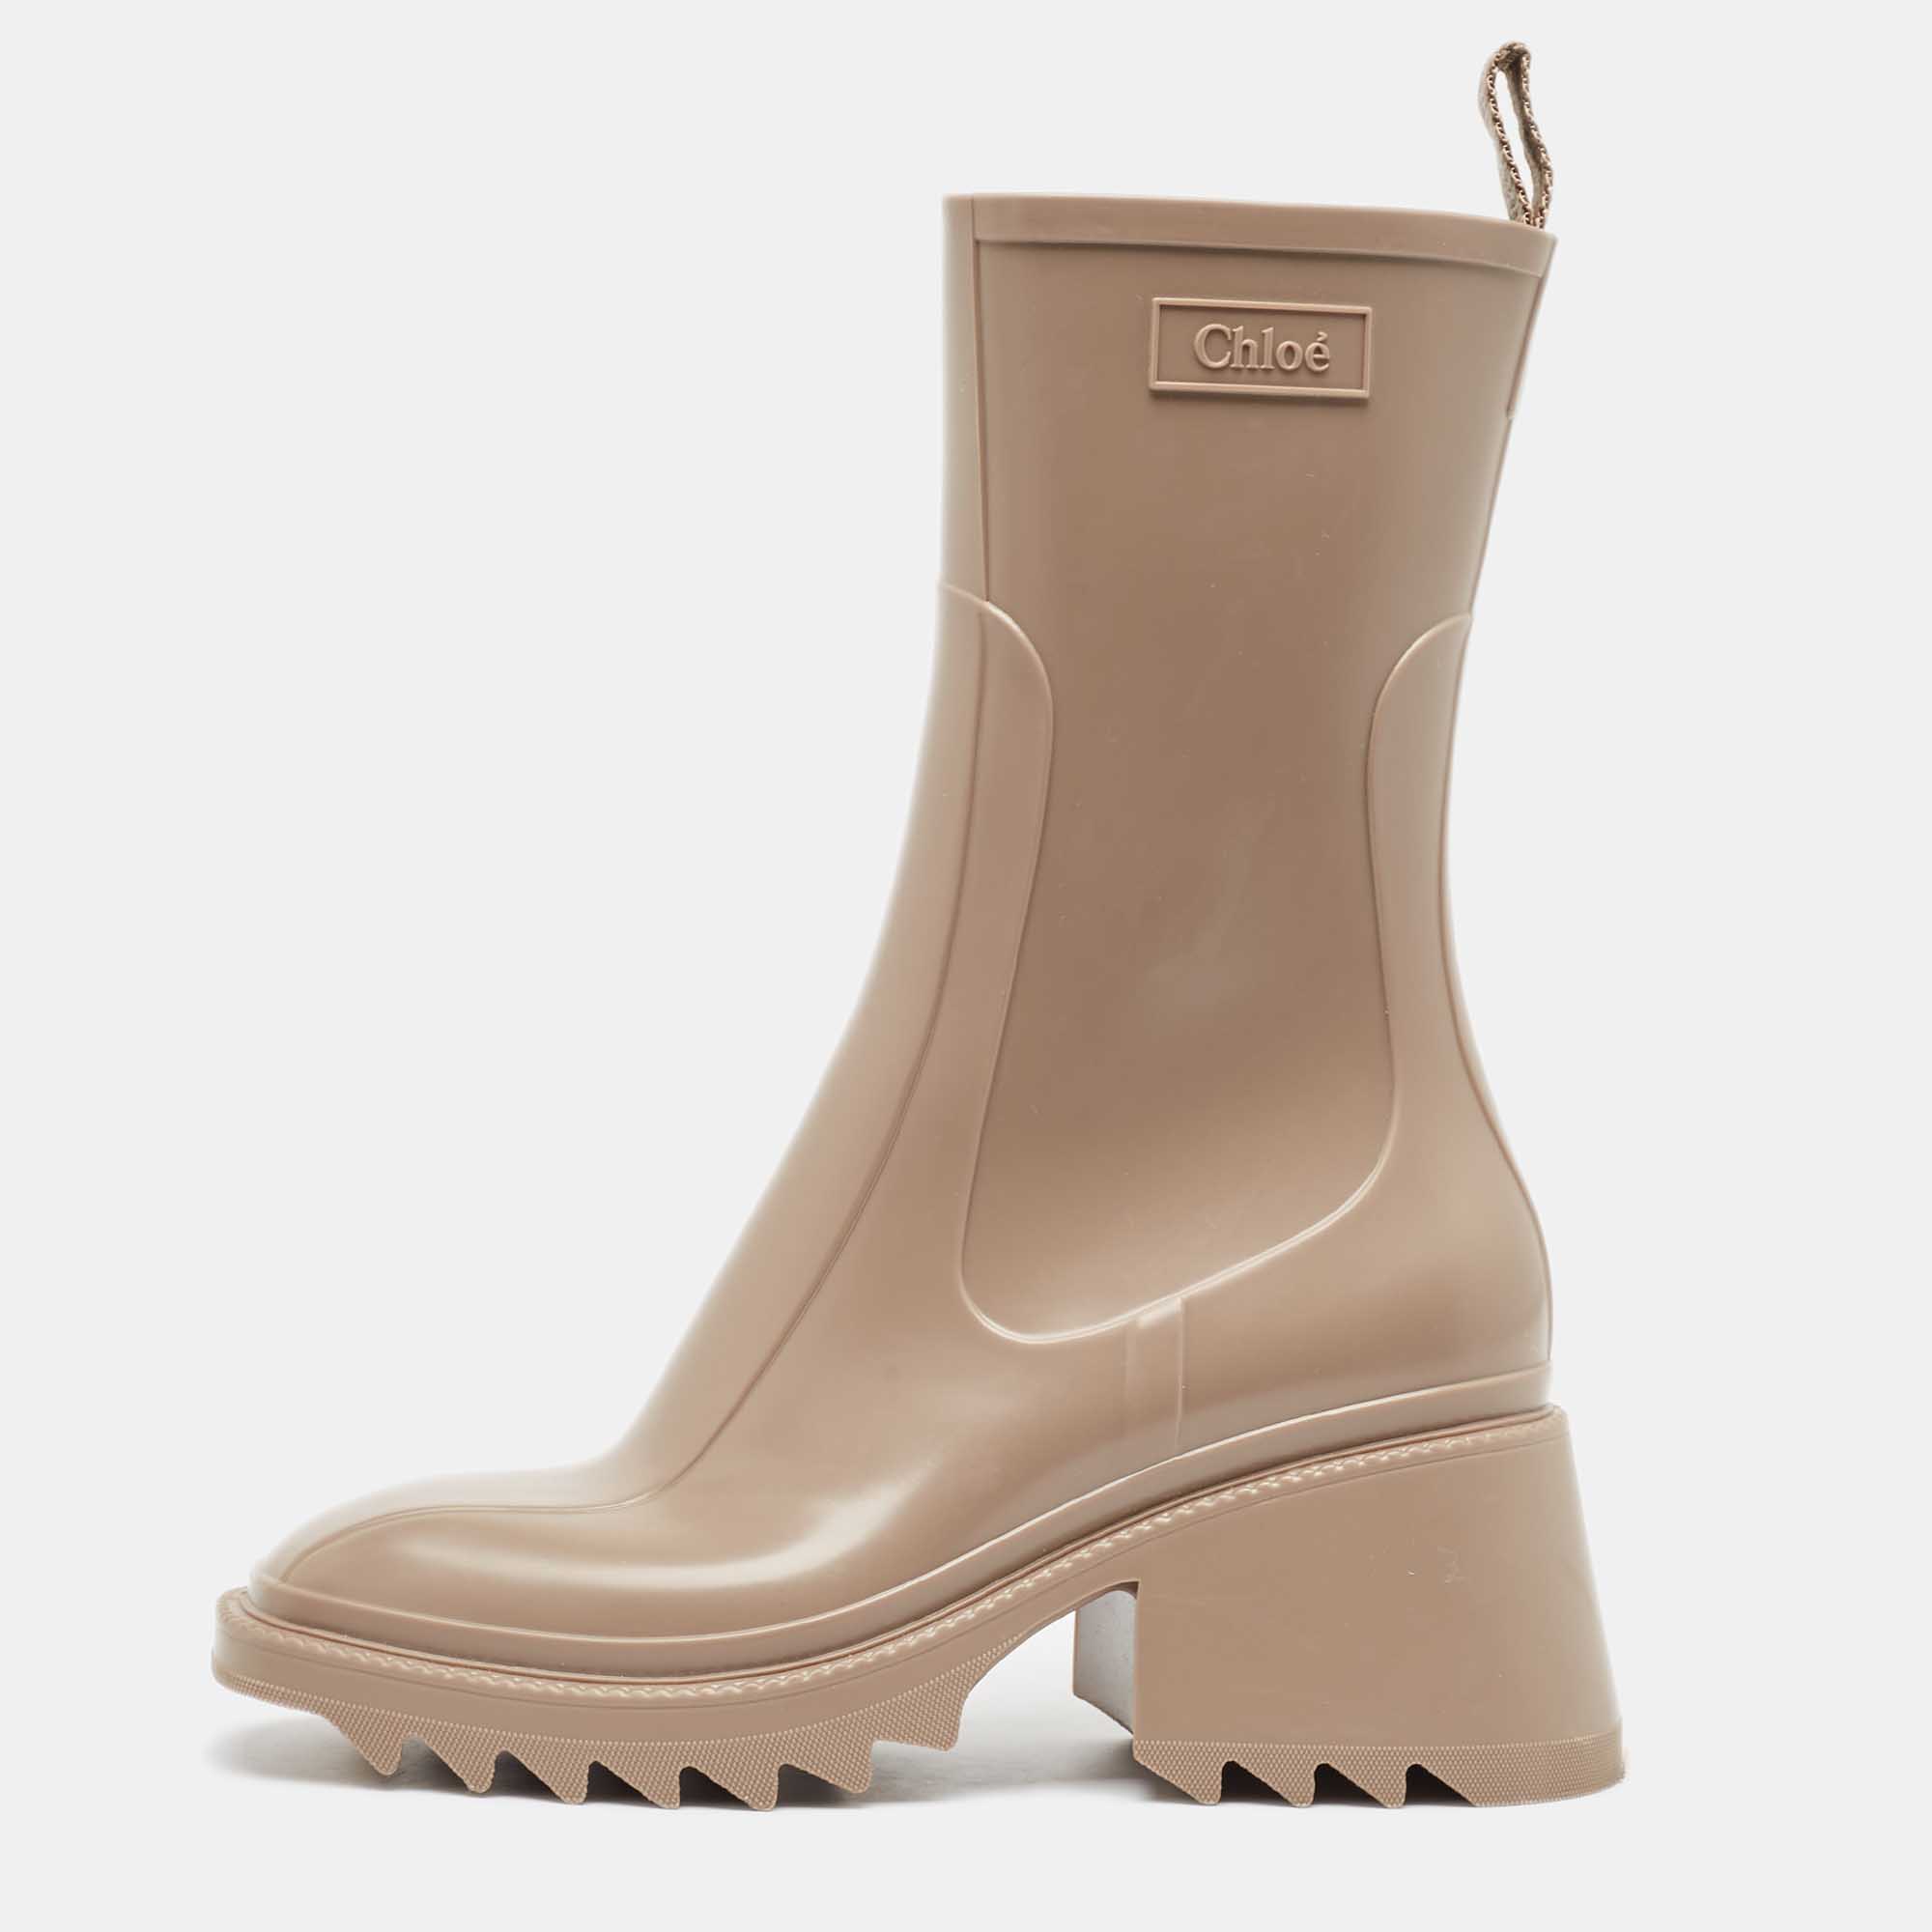 Chloe beige rubber mid calf rain boots size 37